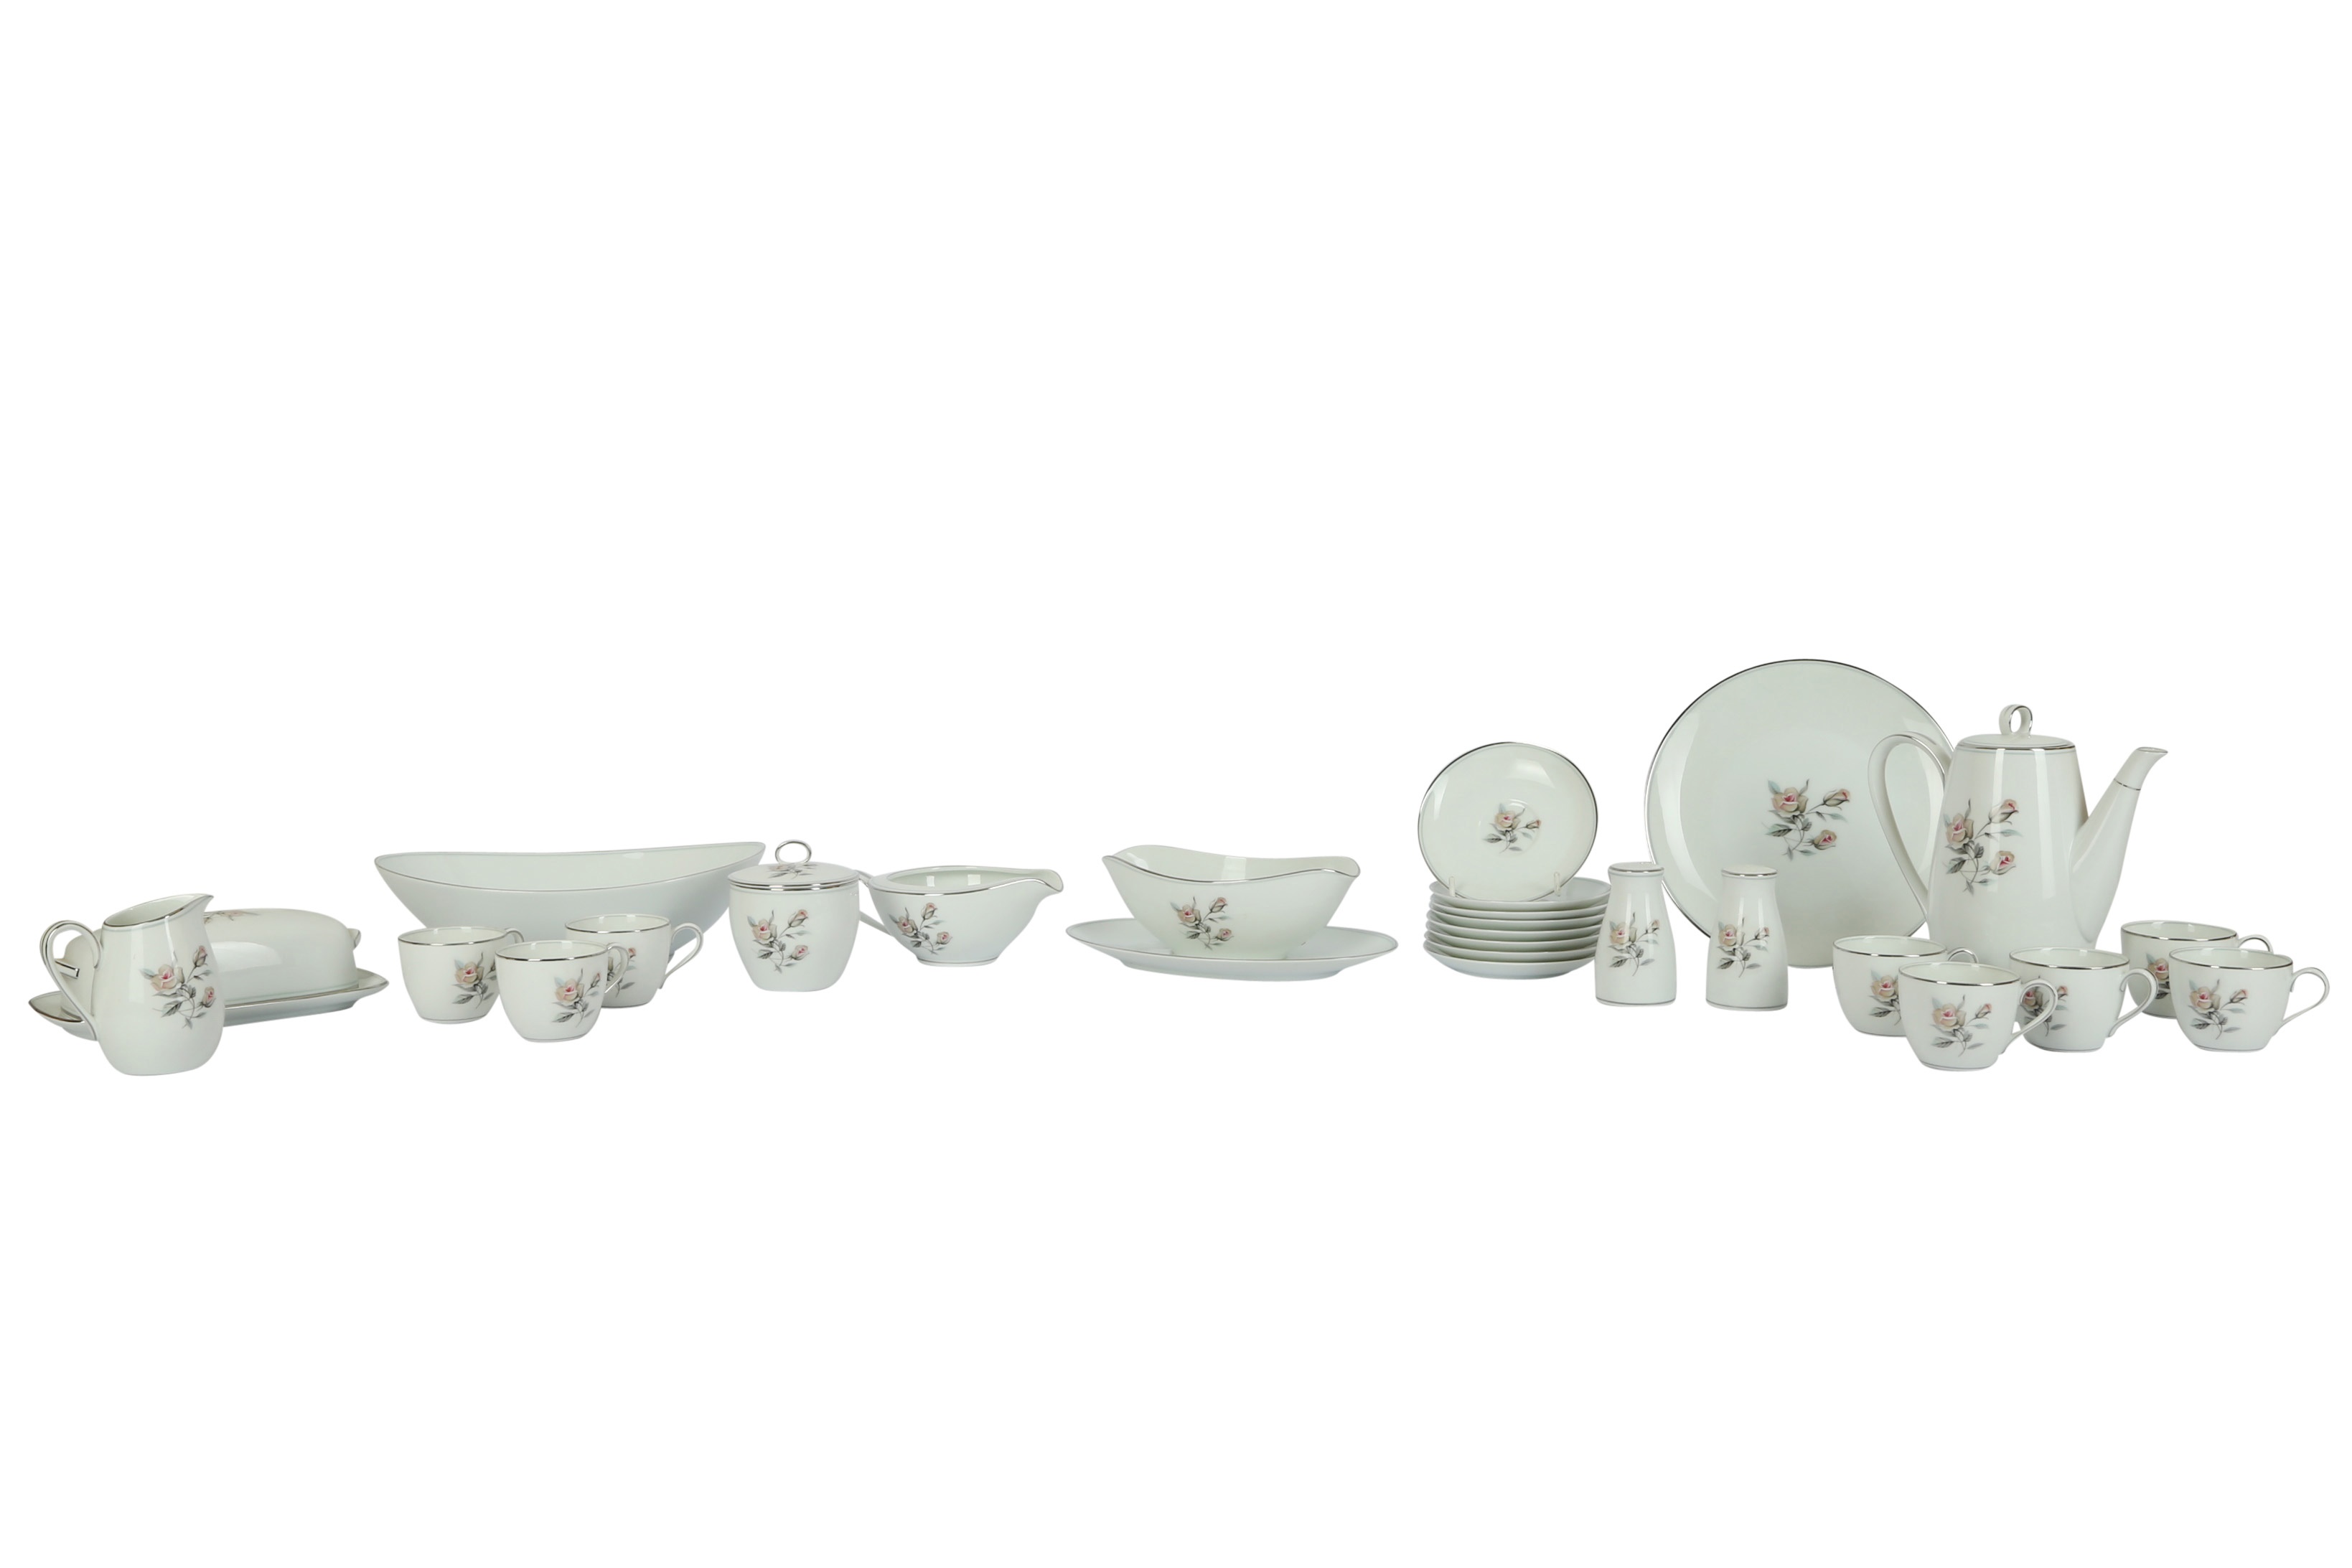 A Noritake porcelain dinner service, Margot pattern